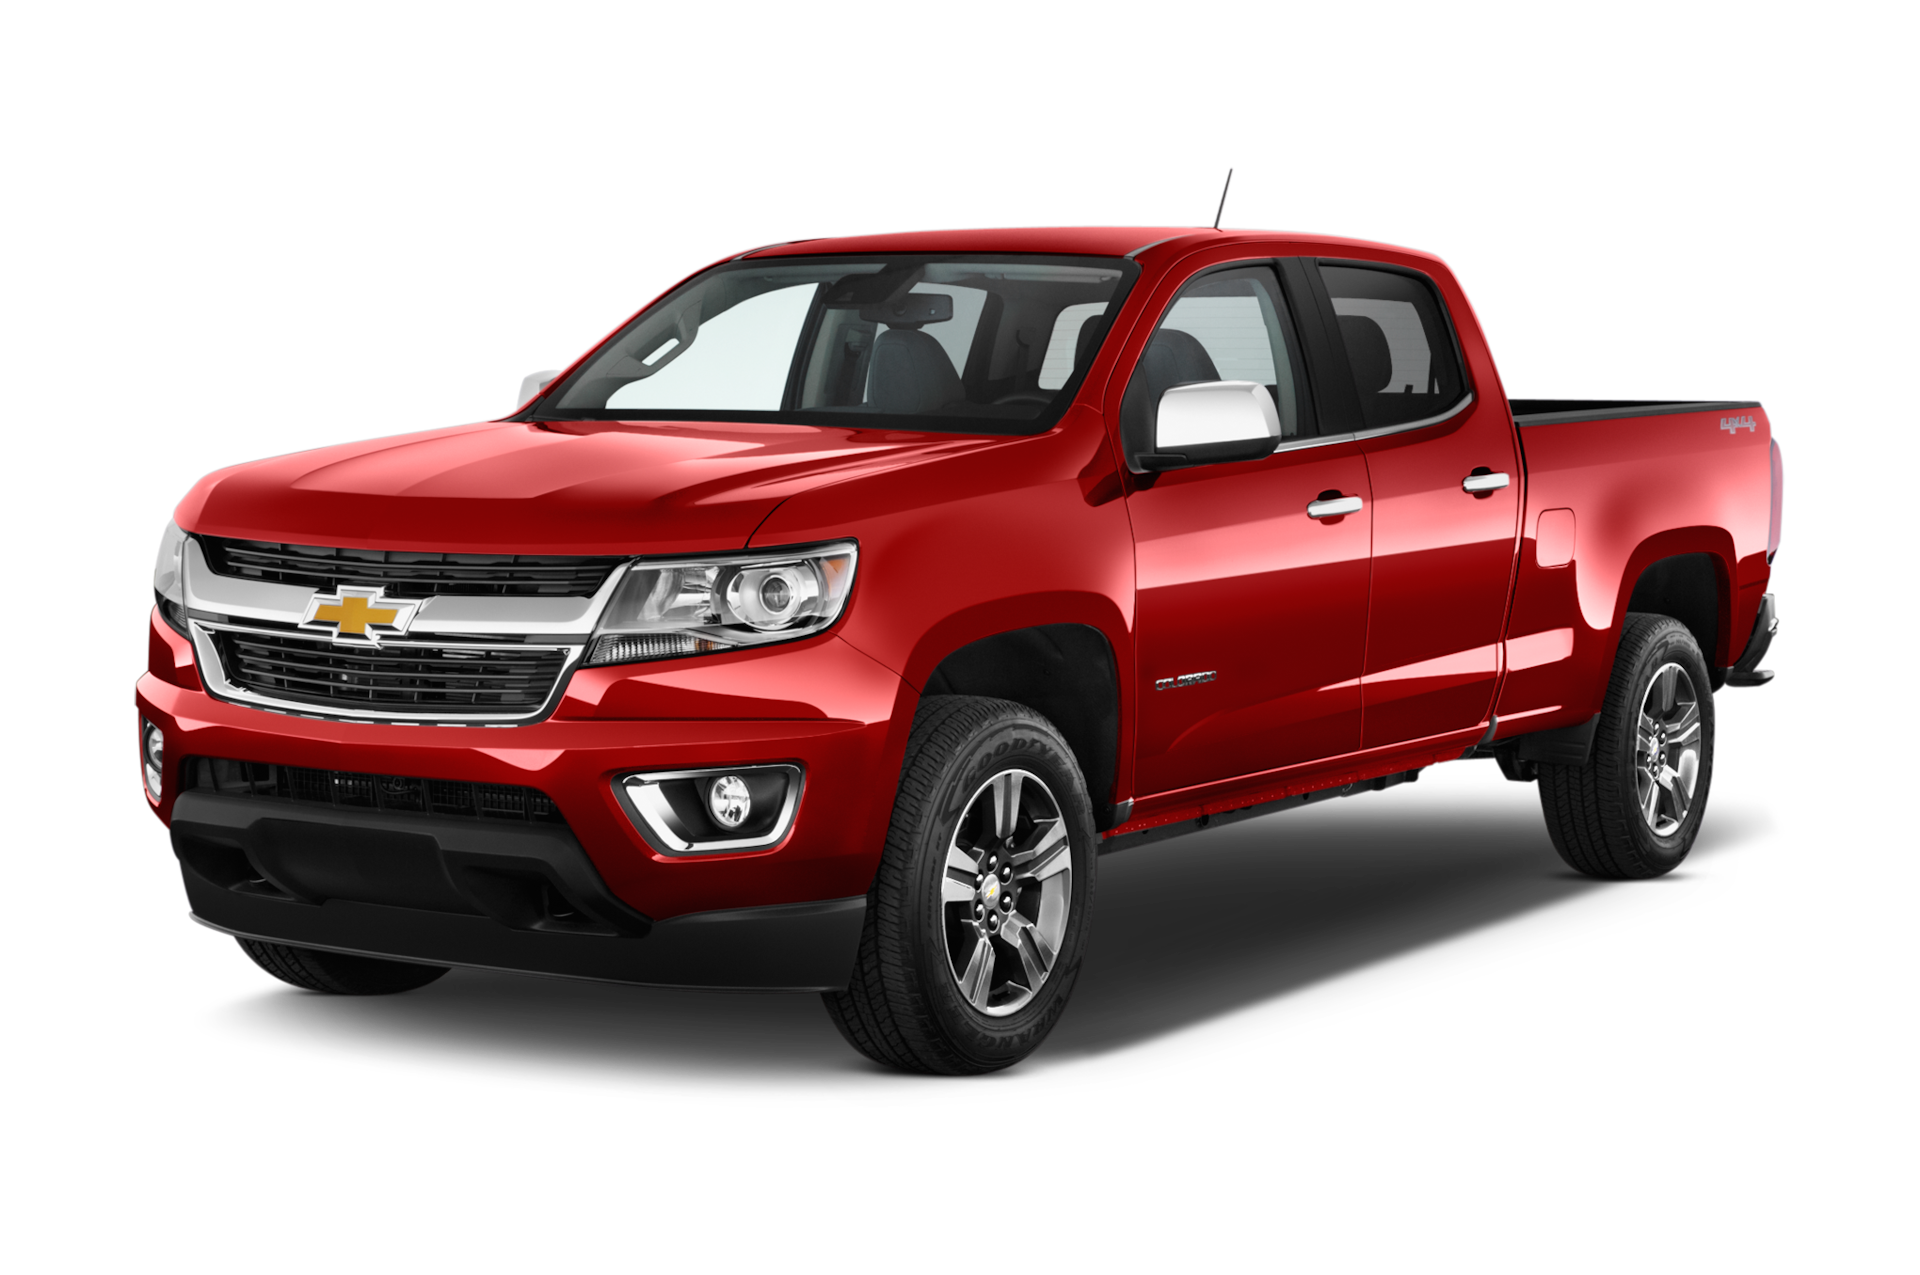 2018 Chevrolet Colorado Prices, Reviews, and Photos - MotorTrend